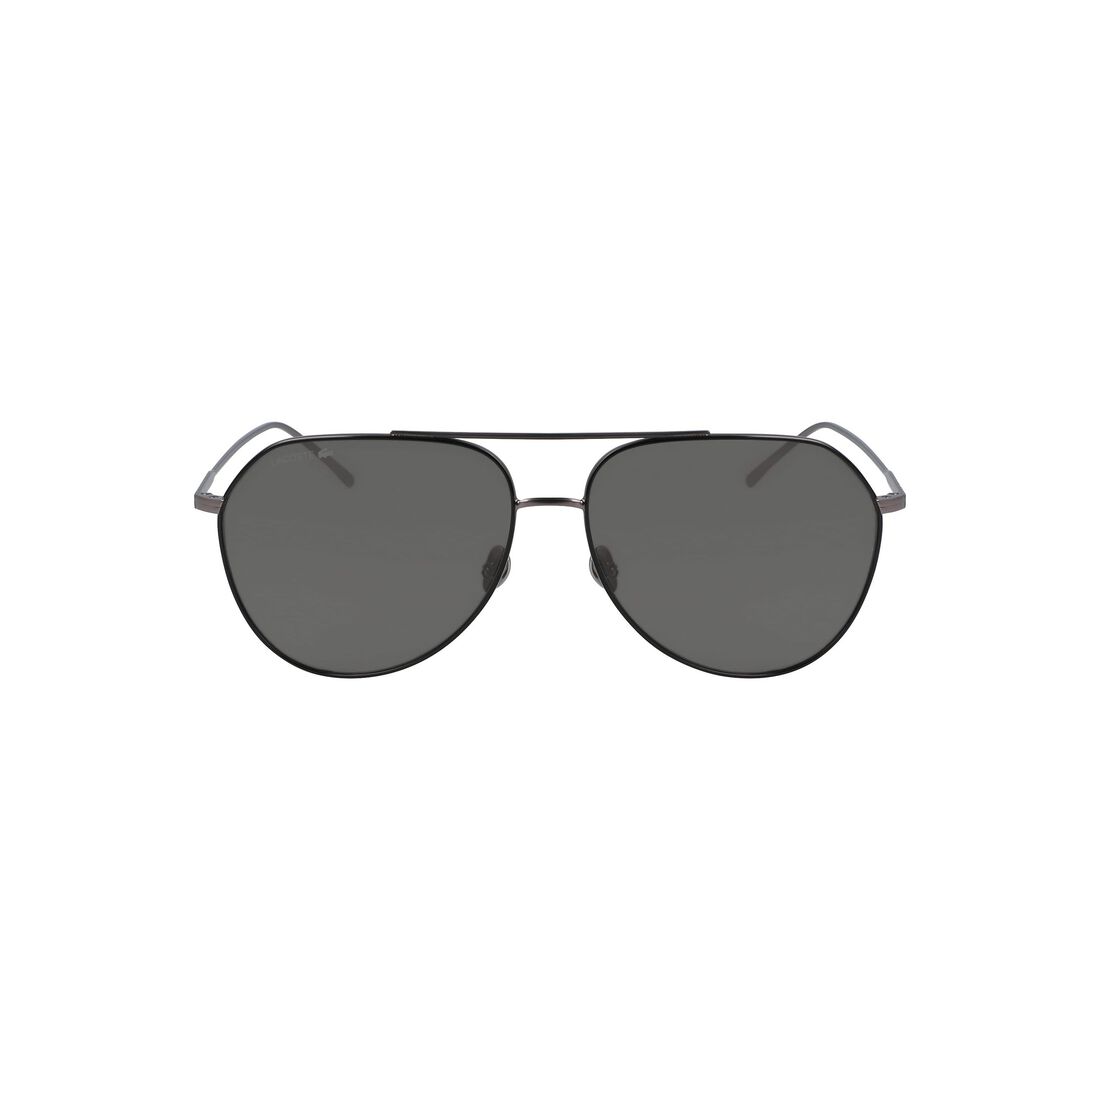 Lacoste Metal Sonnenbrille Herren Grau | KZVX-67504